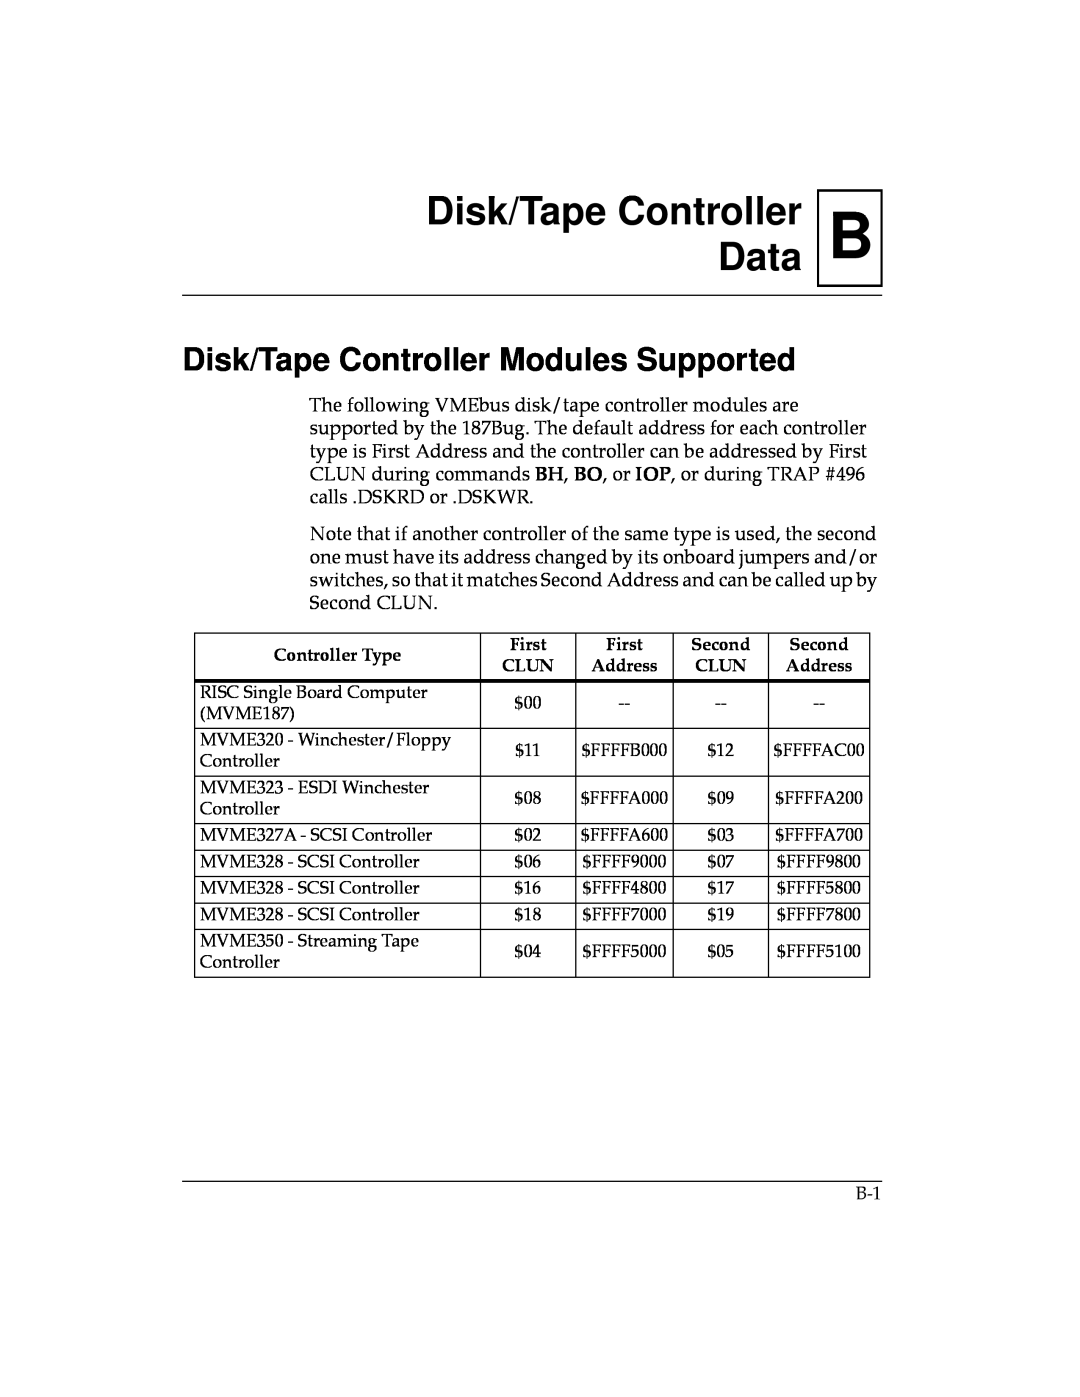 Motorola MVME187 manual BDisk/Tape Controller Data, Disk/Tape Controller Modules Supported 